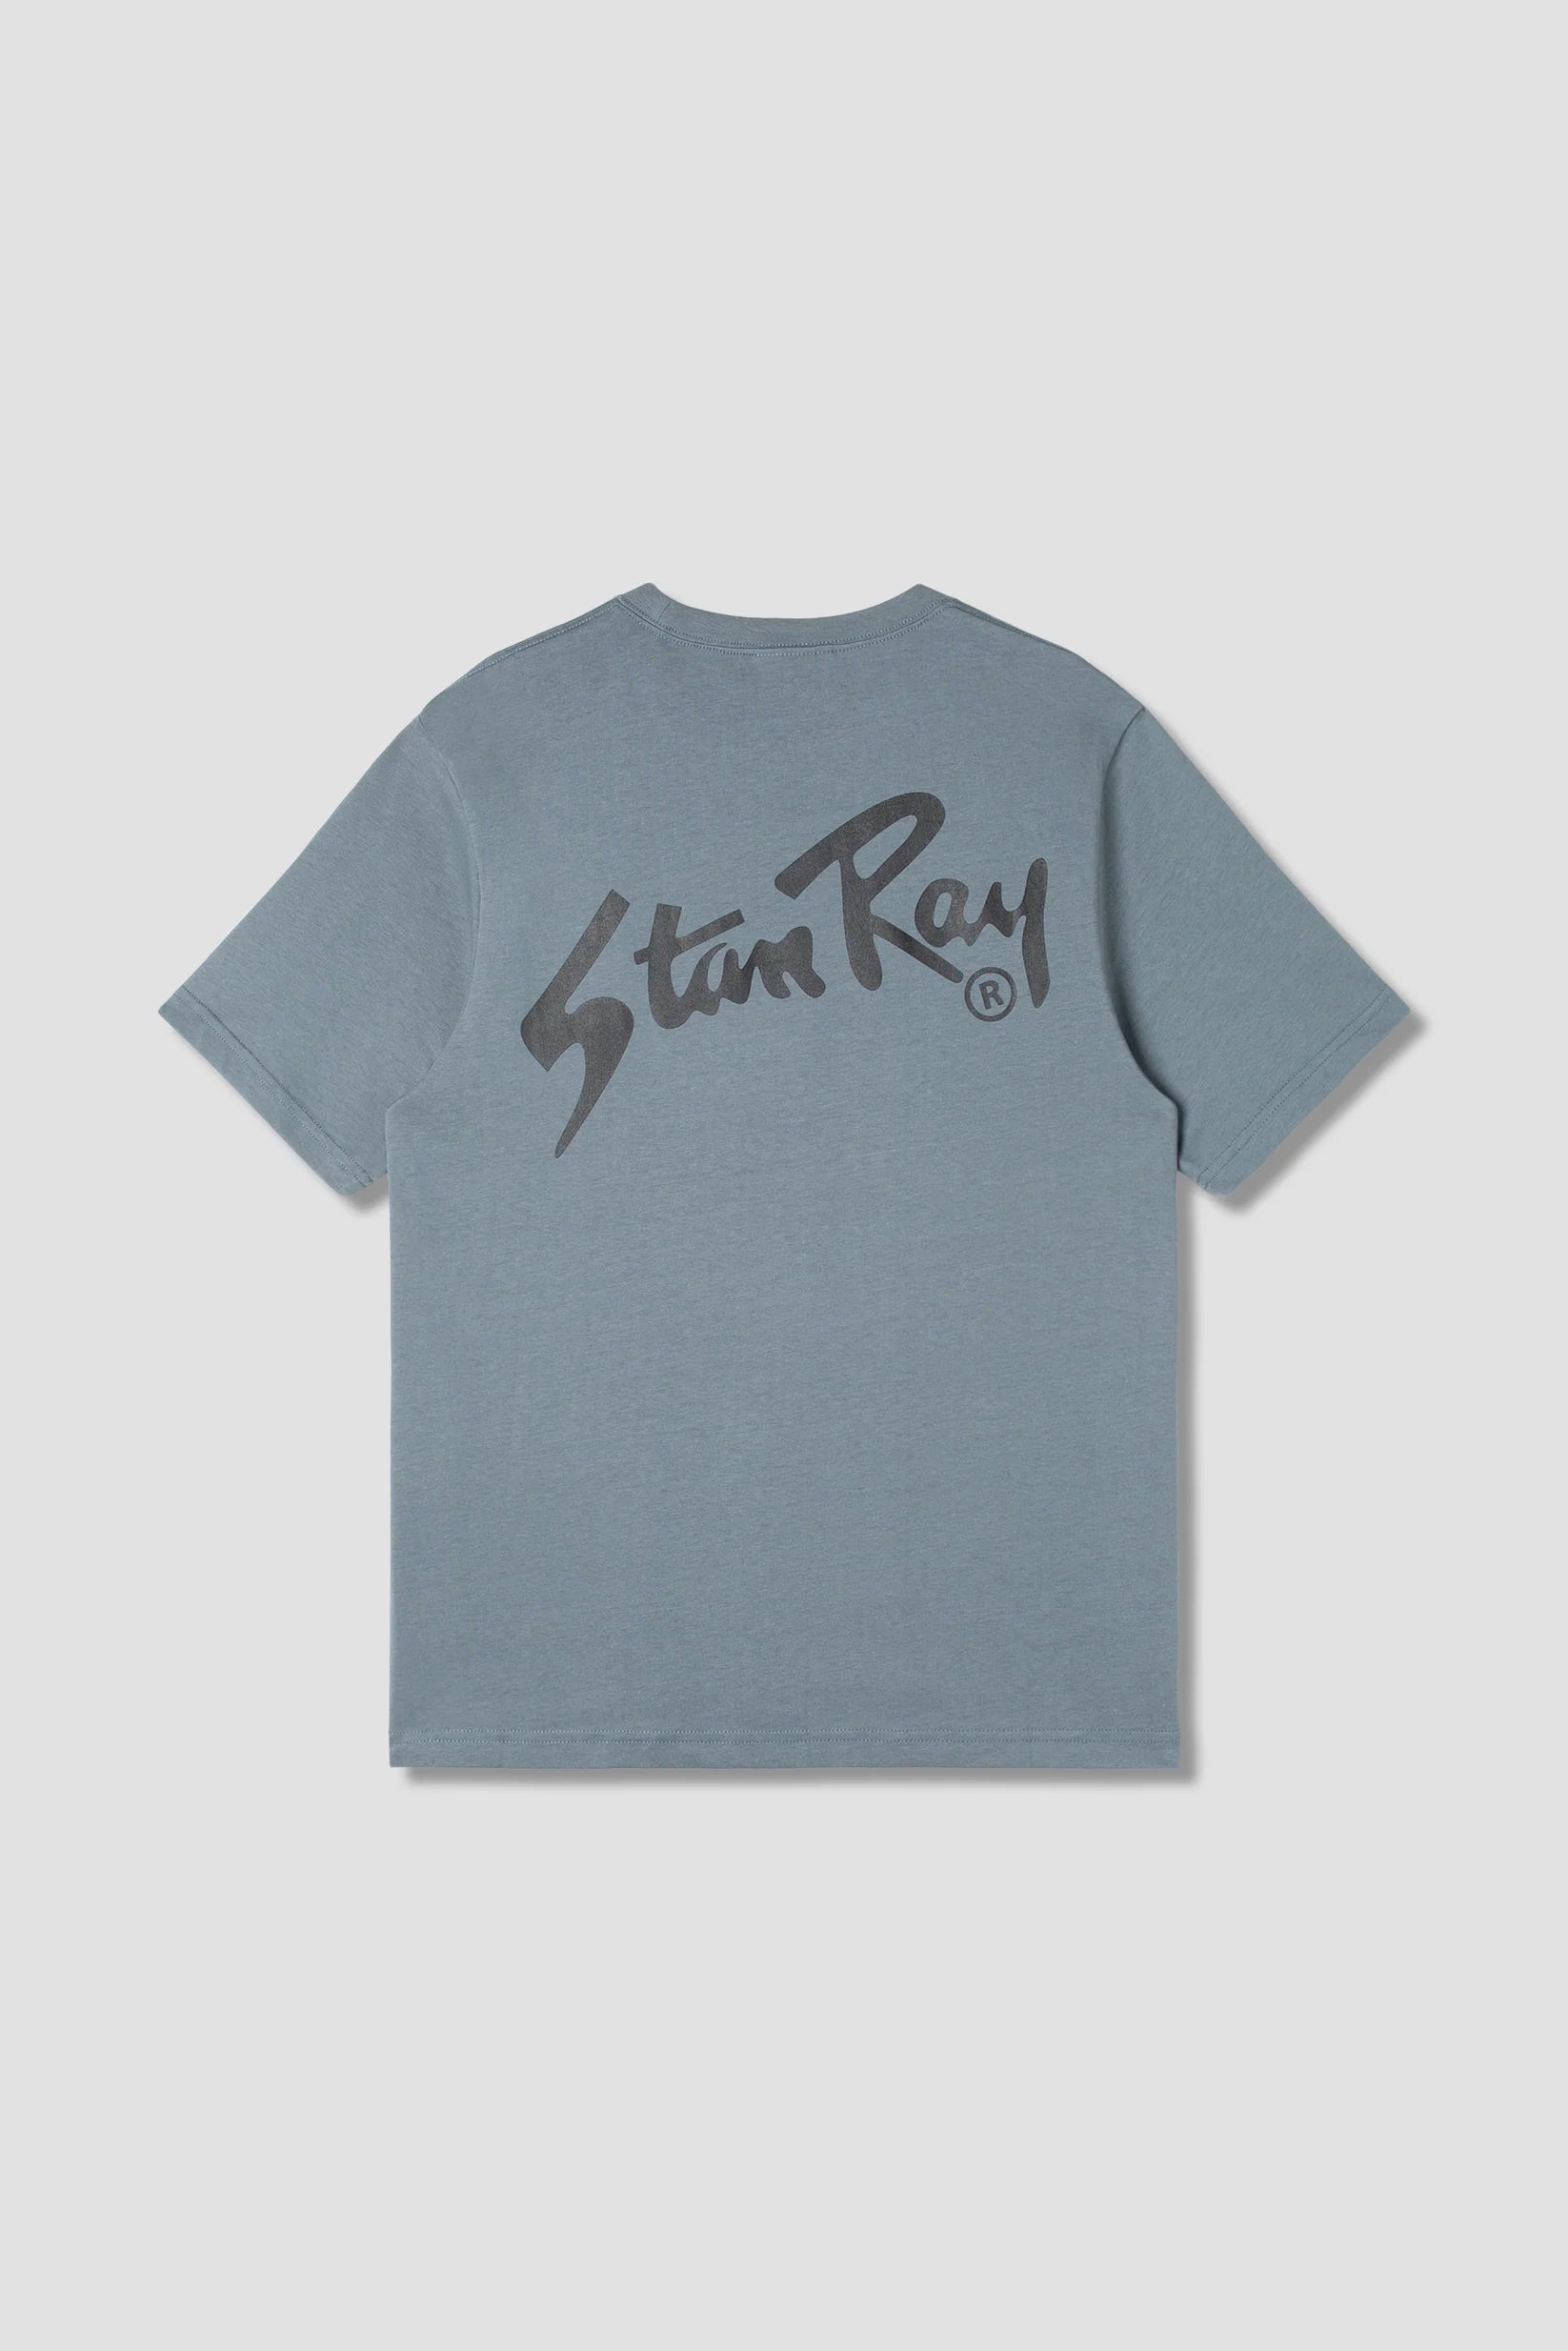 Stan Ray OG T-shirt - Battle Grey